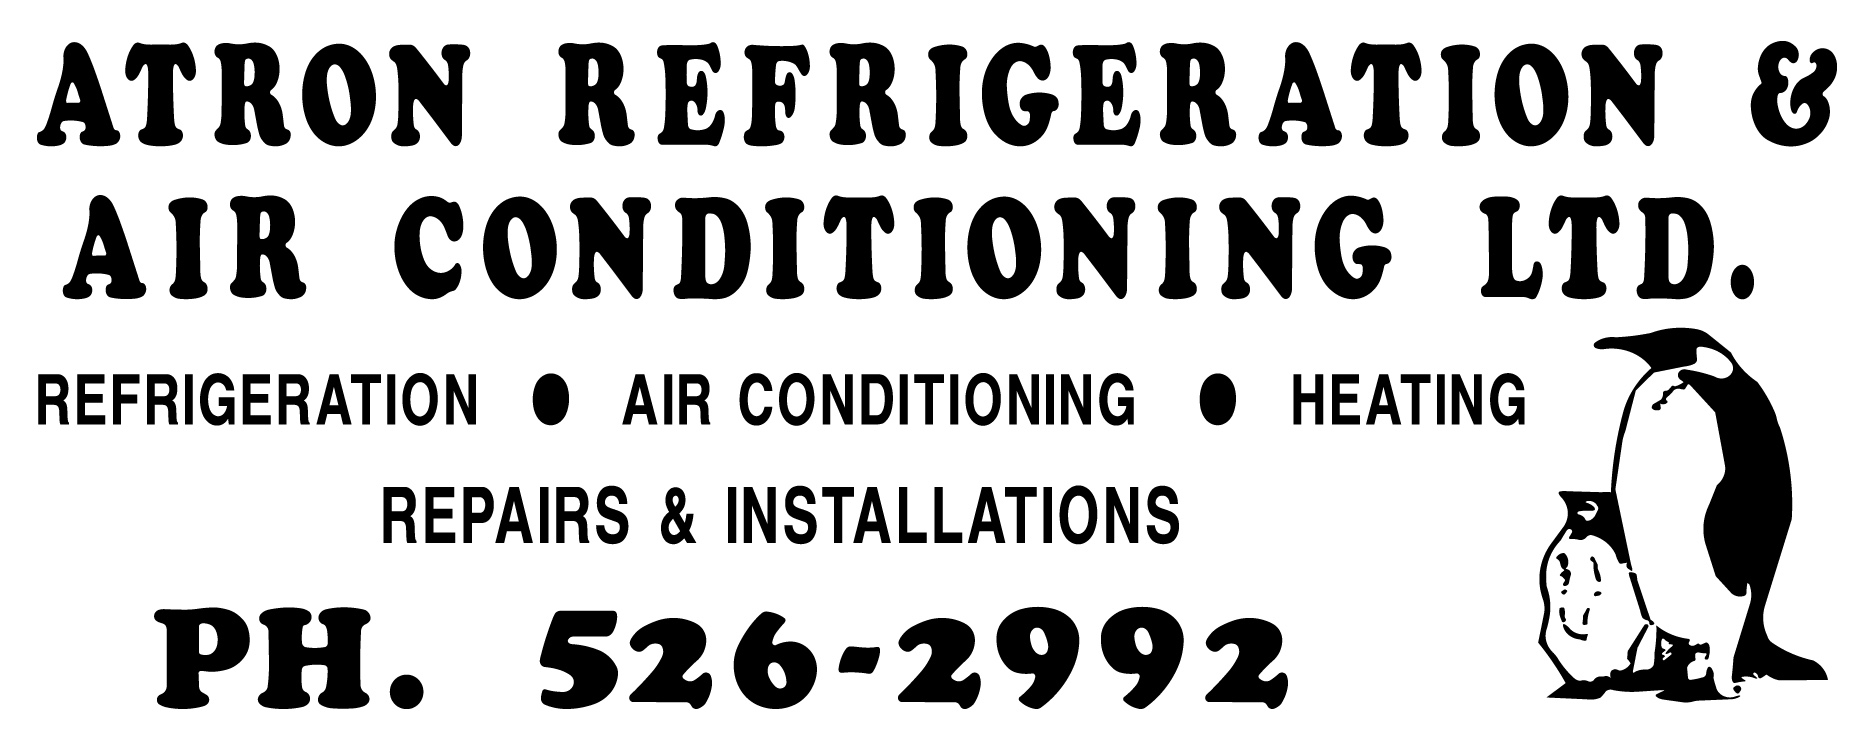 Atron Refrigeration & Air Conditioning Ltd.